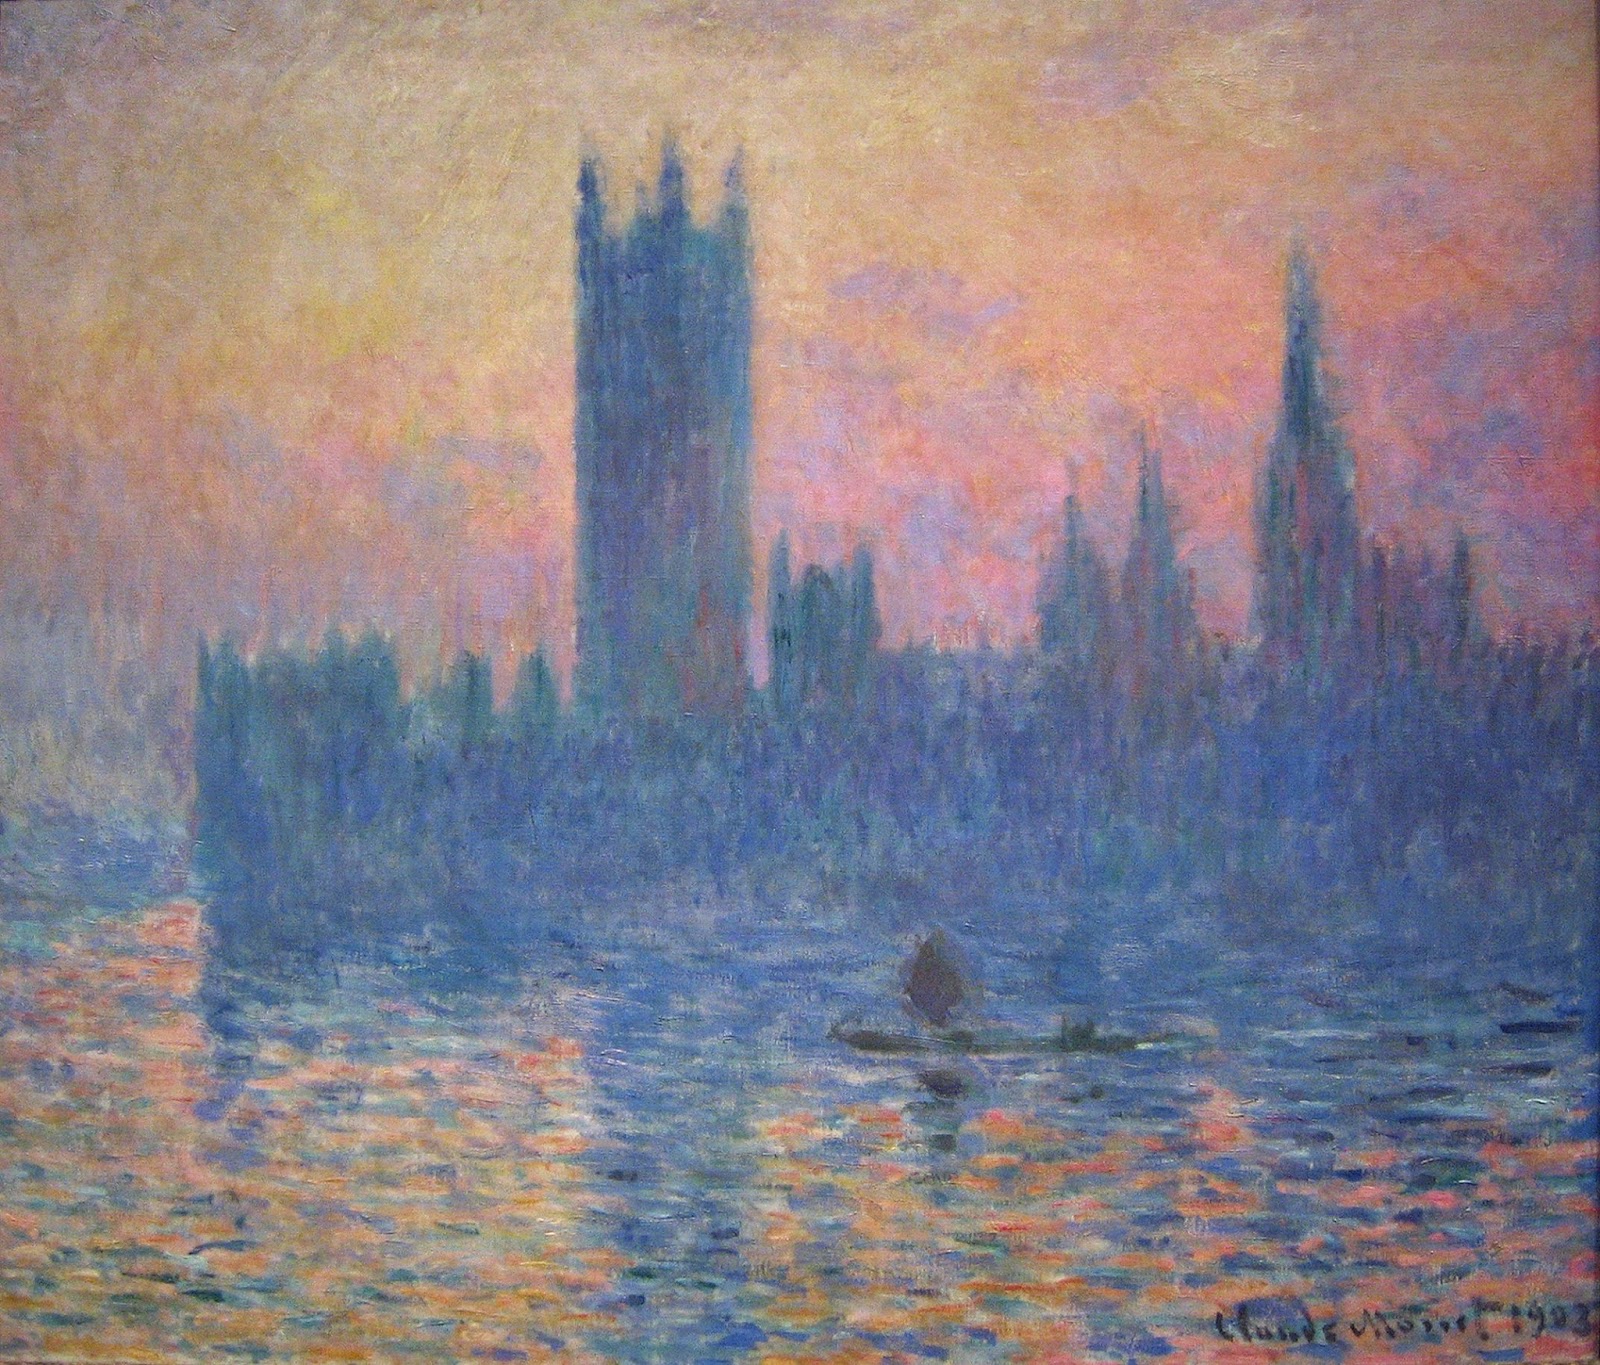 Claude+Monet-1840-1926 (758).jpg